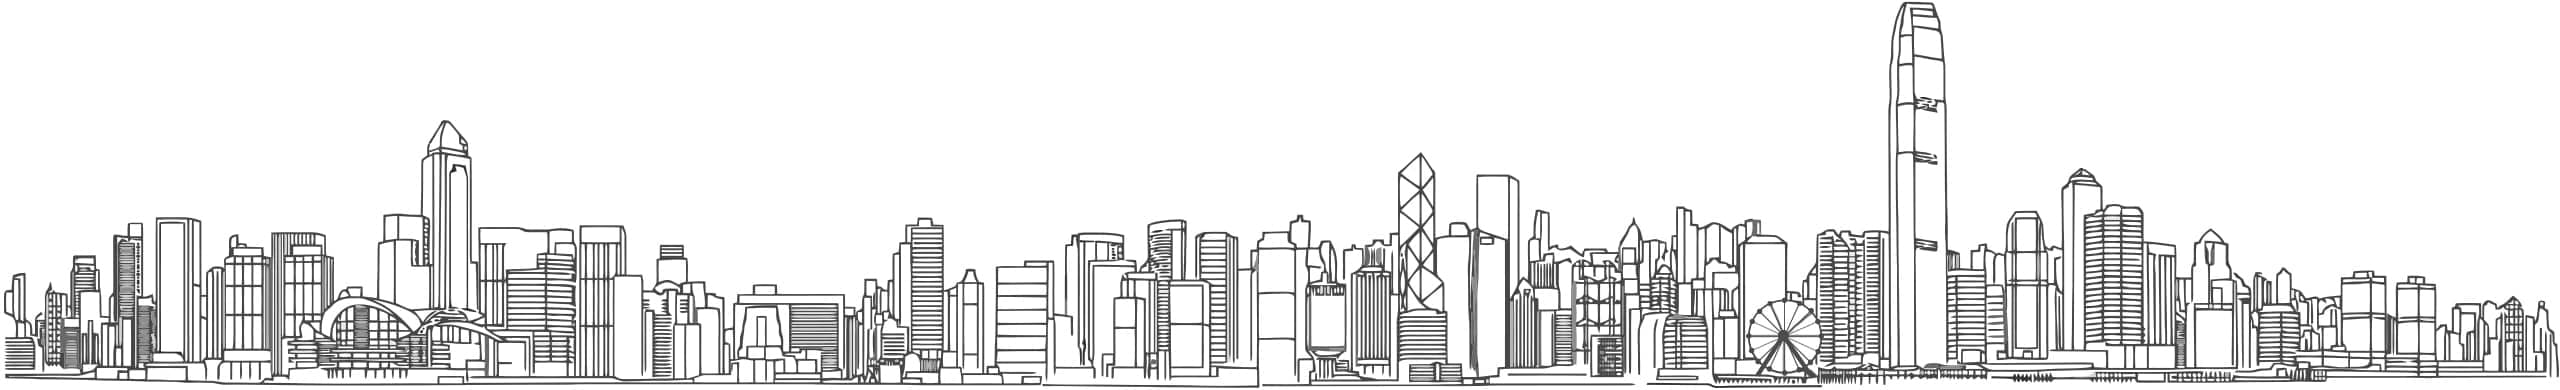 Addison Wan Hong Kong Web Design Company-What We Do_addisonwan-hongkong-webdesigncompany-background-cms-website